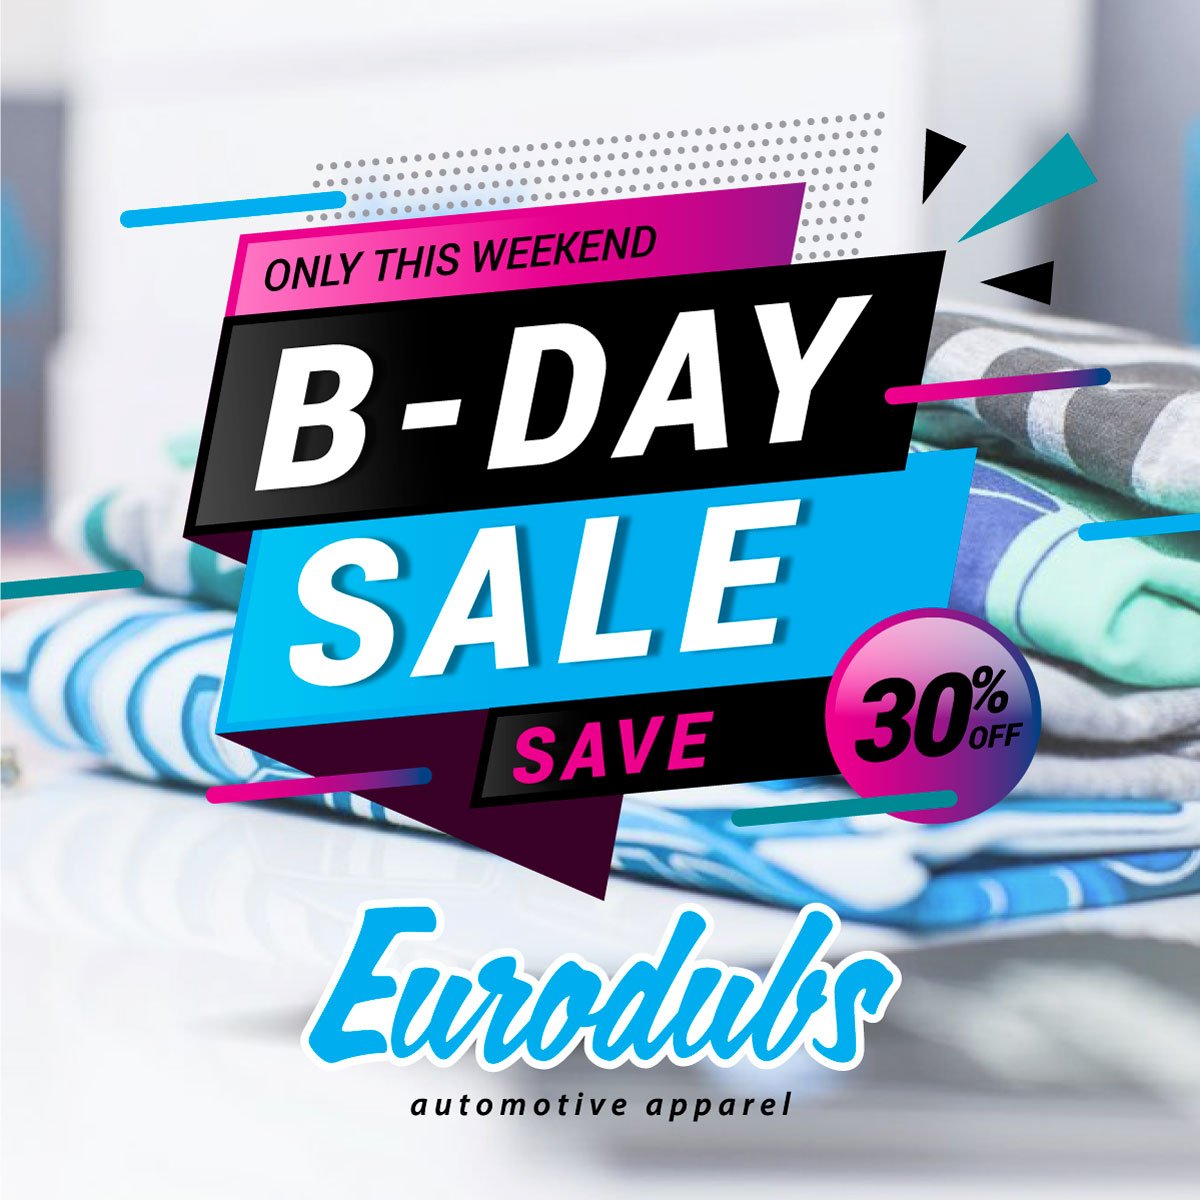 Eurodubs Bday sale 2018 Save 30%